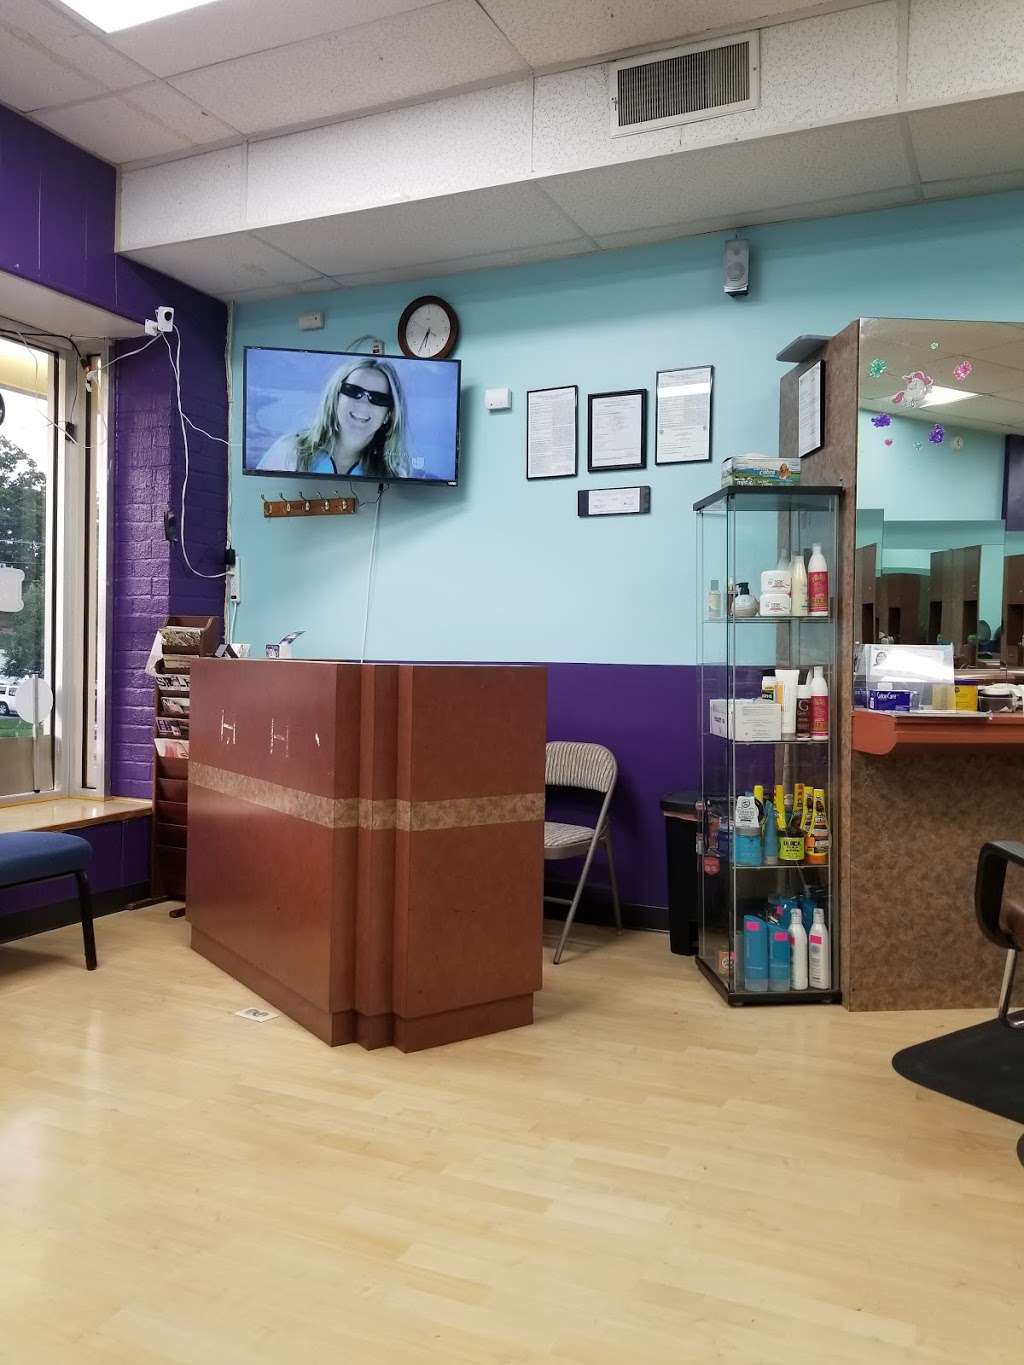 Fantastic hair salon | 4915 57th Ave, Bladensburg, MD 20710, USA | Phone: (301) 277-2545